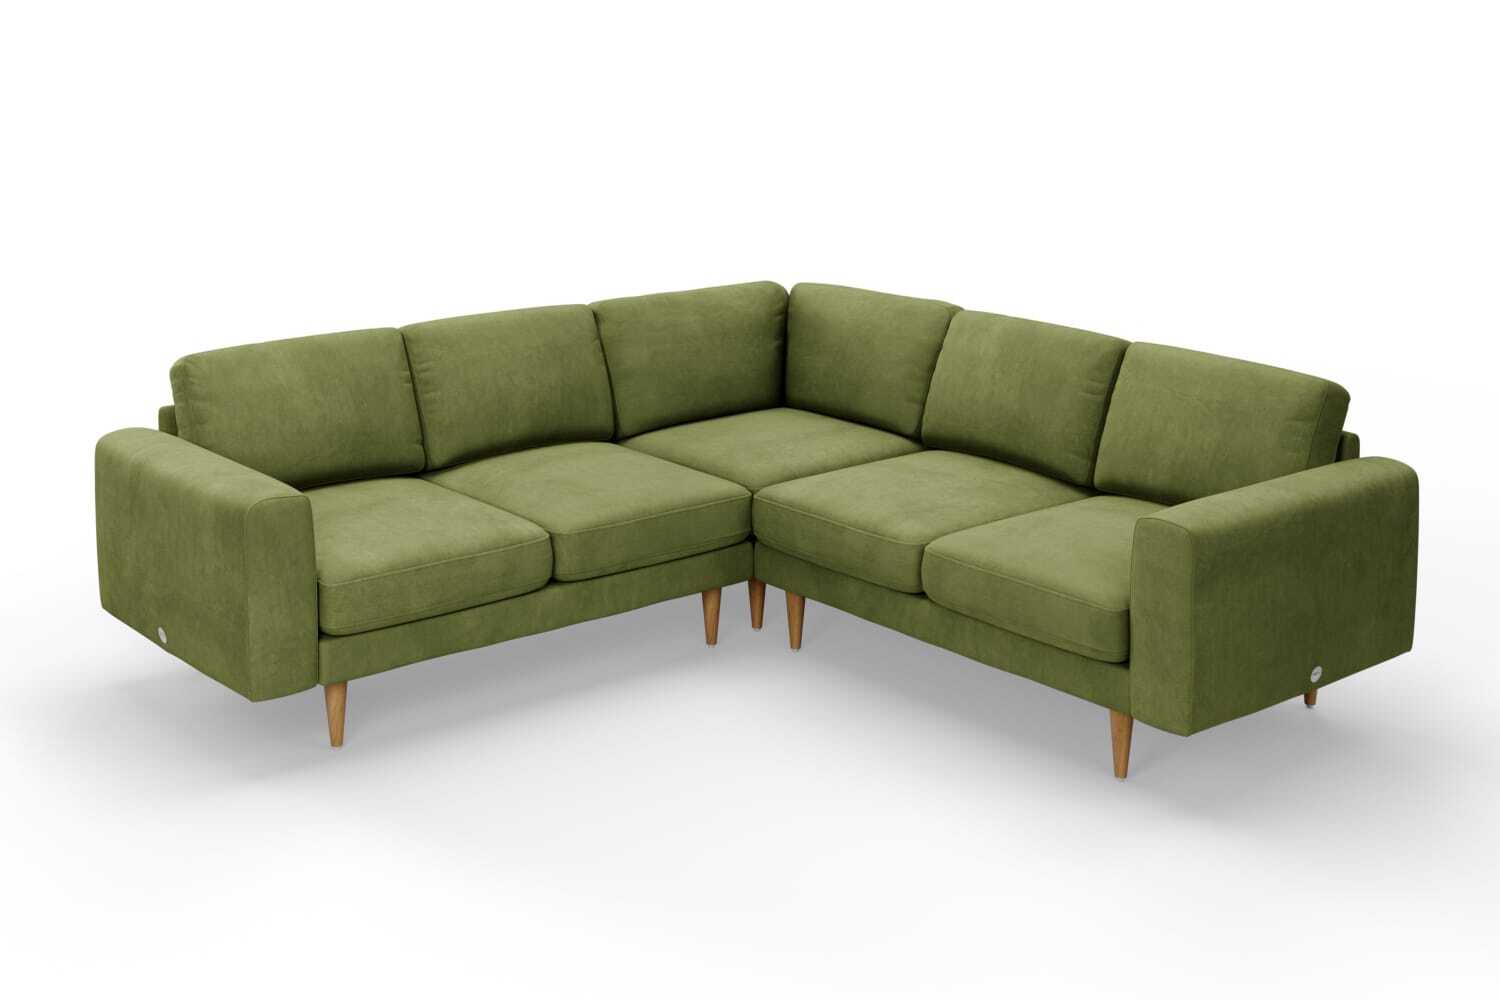 SNUG | The Big Chill Corner Sofa Medium in Olive